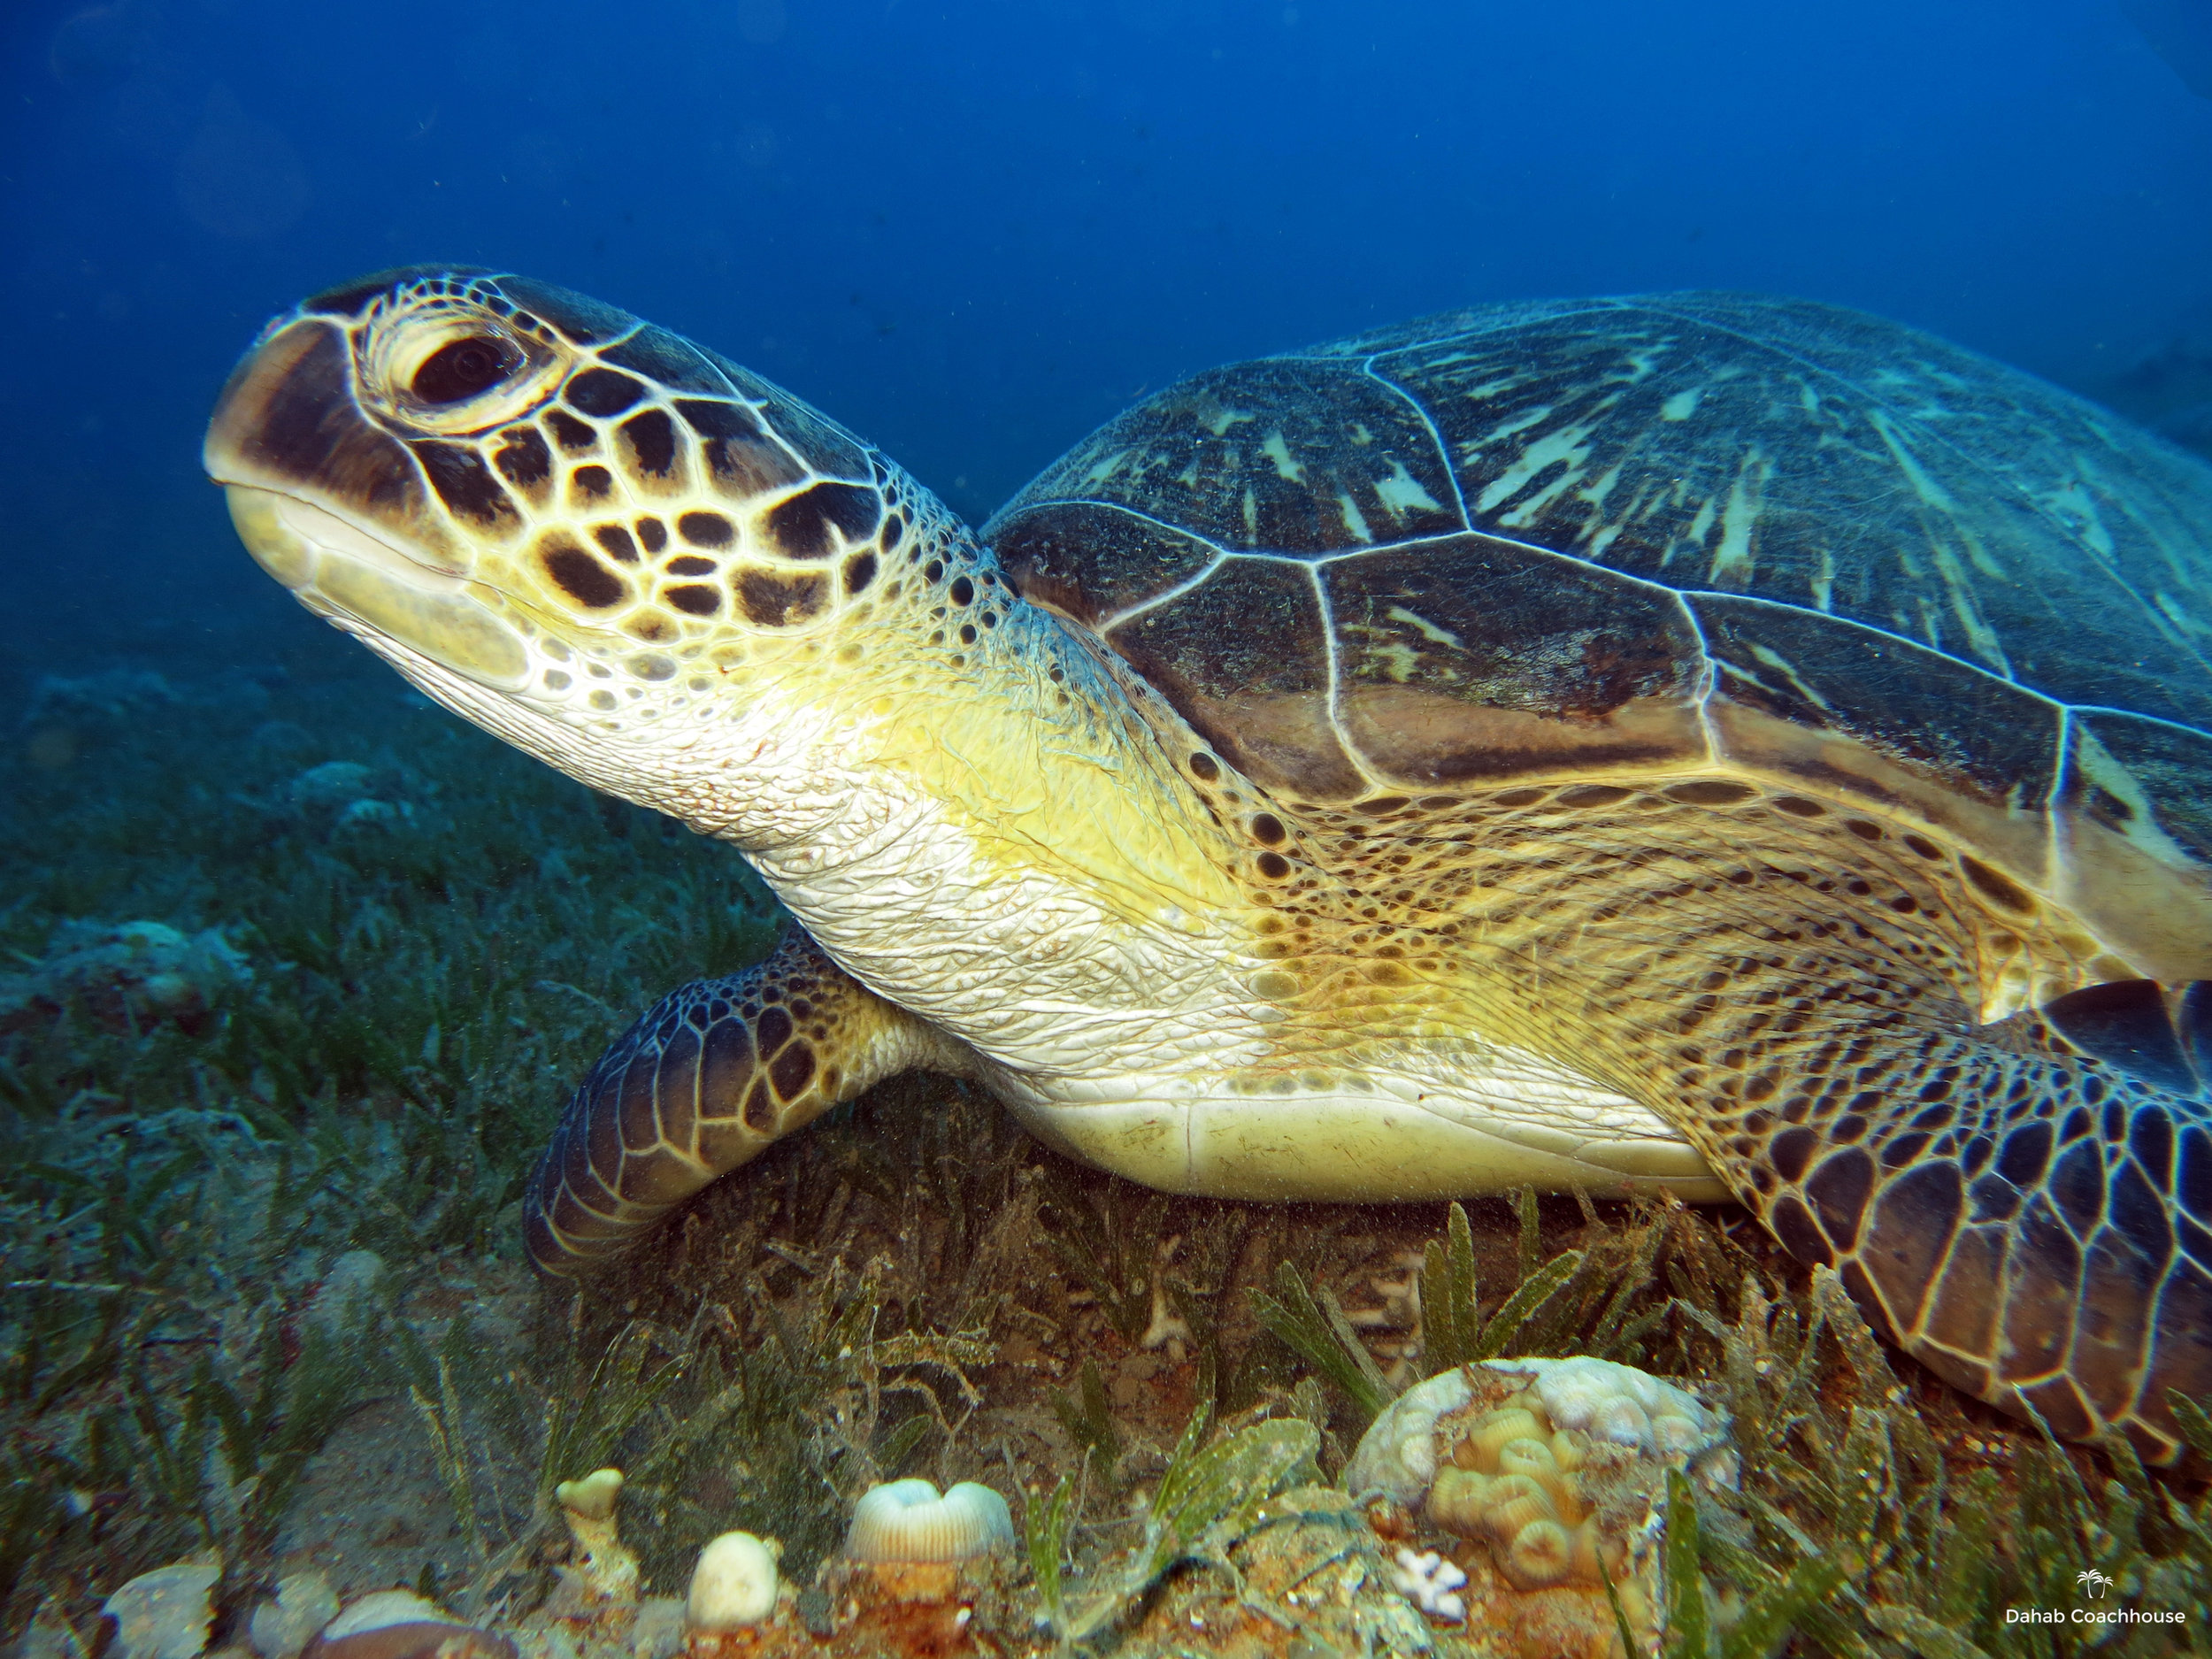 Dahab_Coachhouse_Egypt_Red_Sea_Diving_Beach_Accommodation_Holiday_Travel_Green_Turtle.JPG